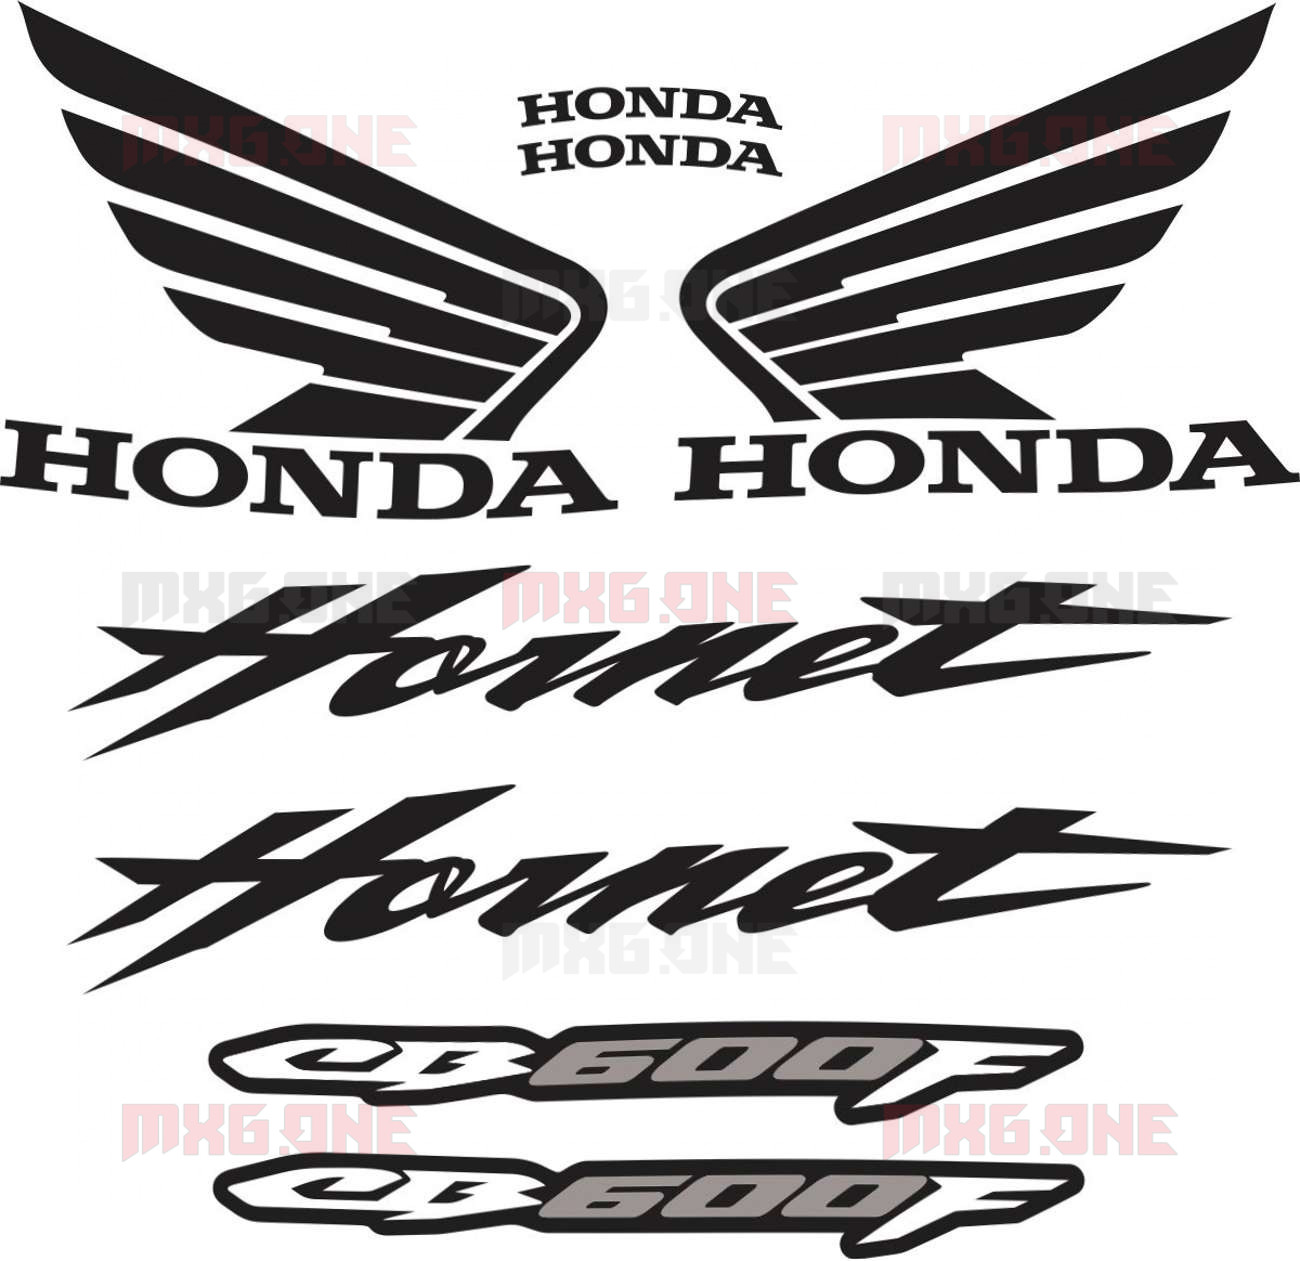 Kit Honda Hornet Moto Motosport Pegatina Vinilo Adhesivo Sticker p1013 